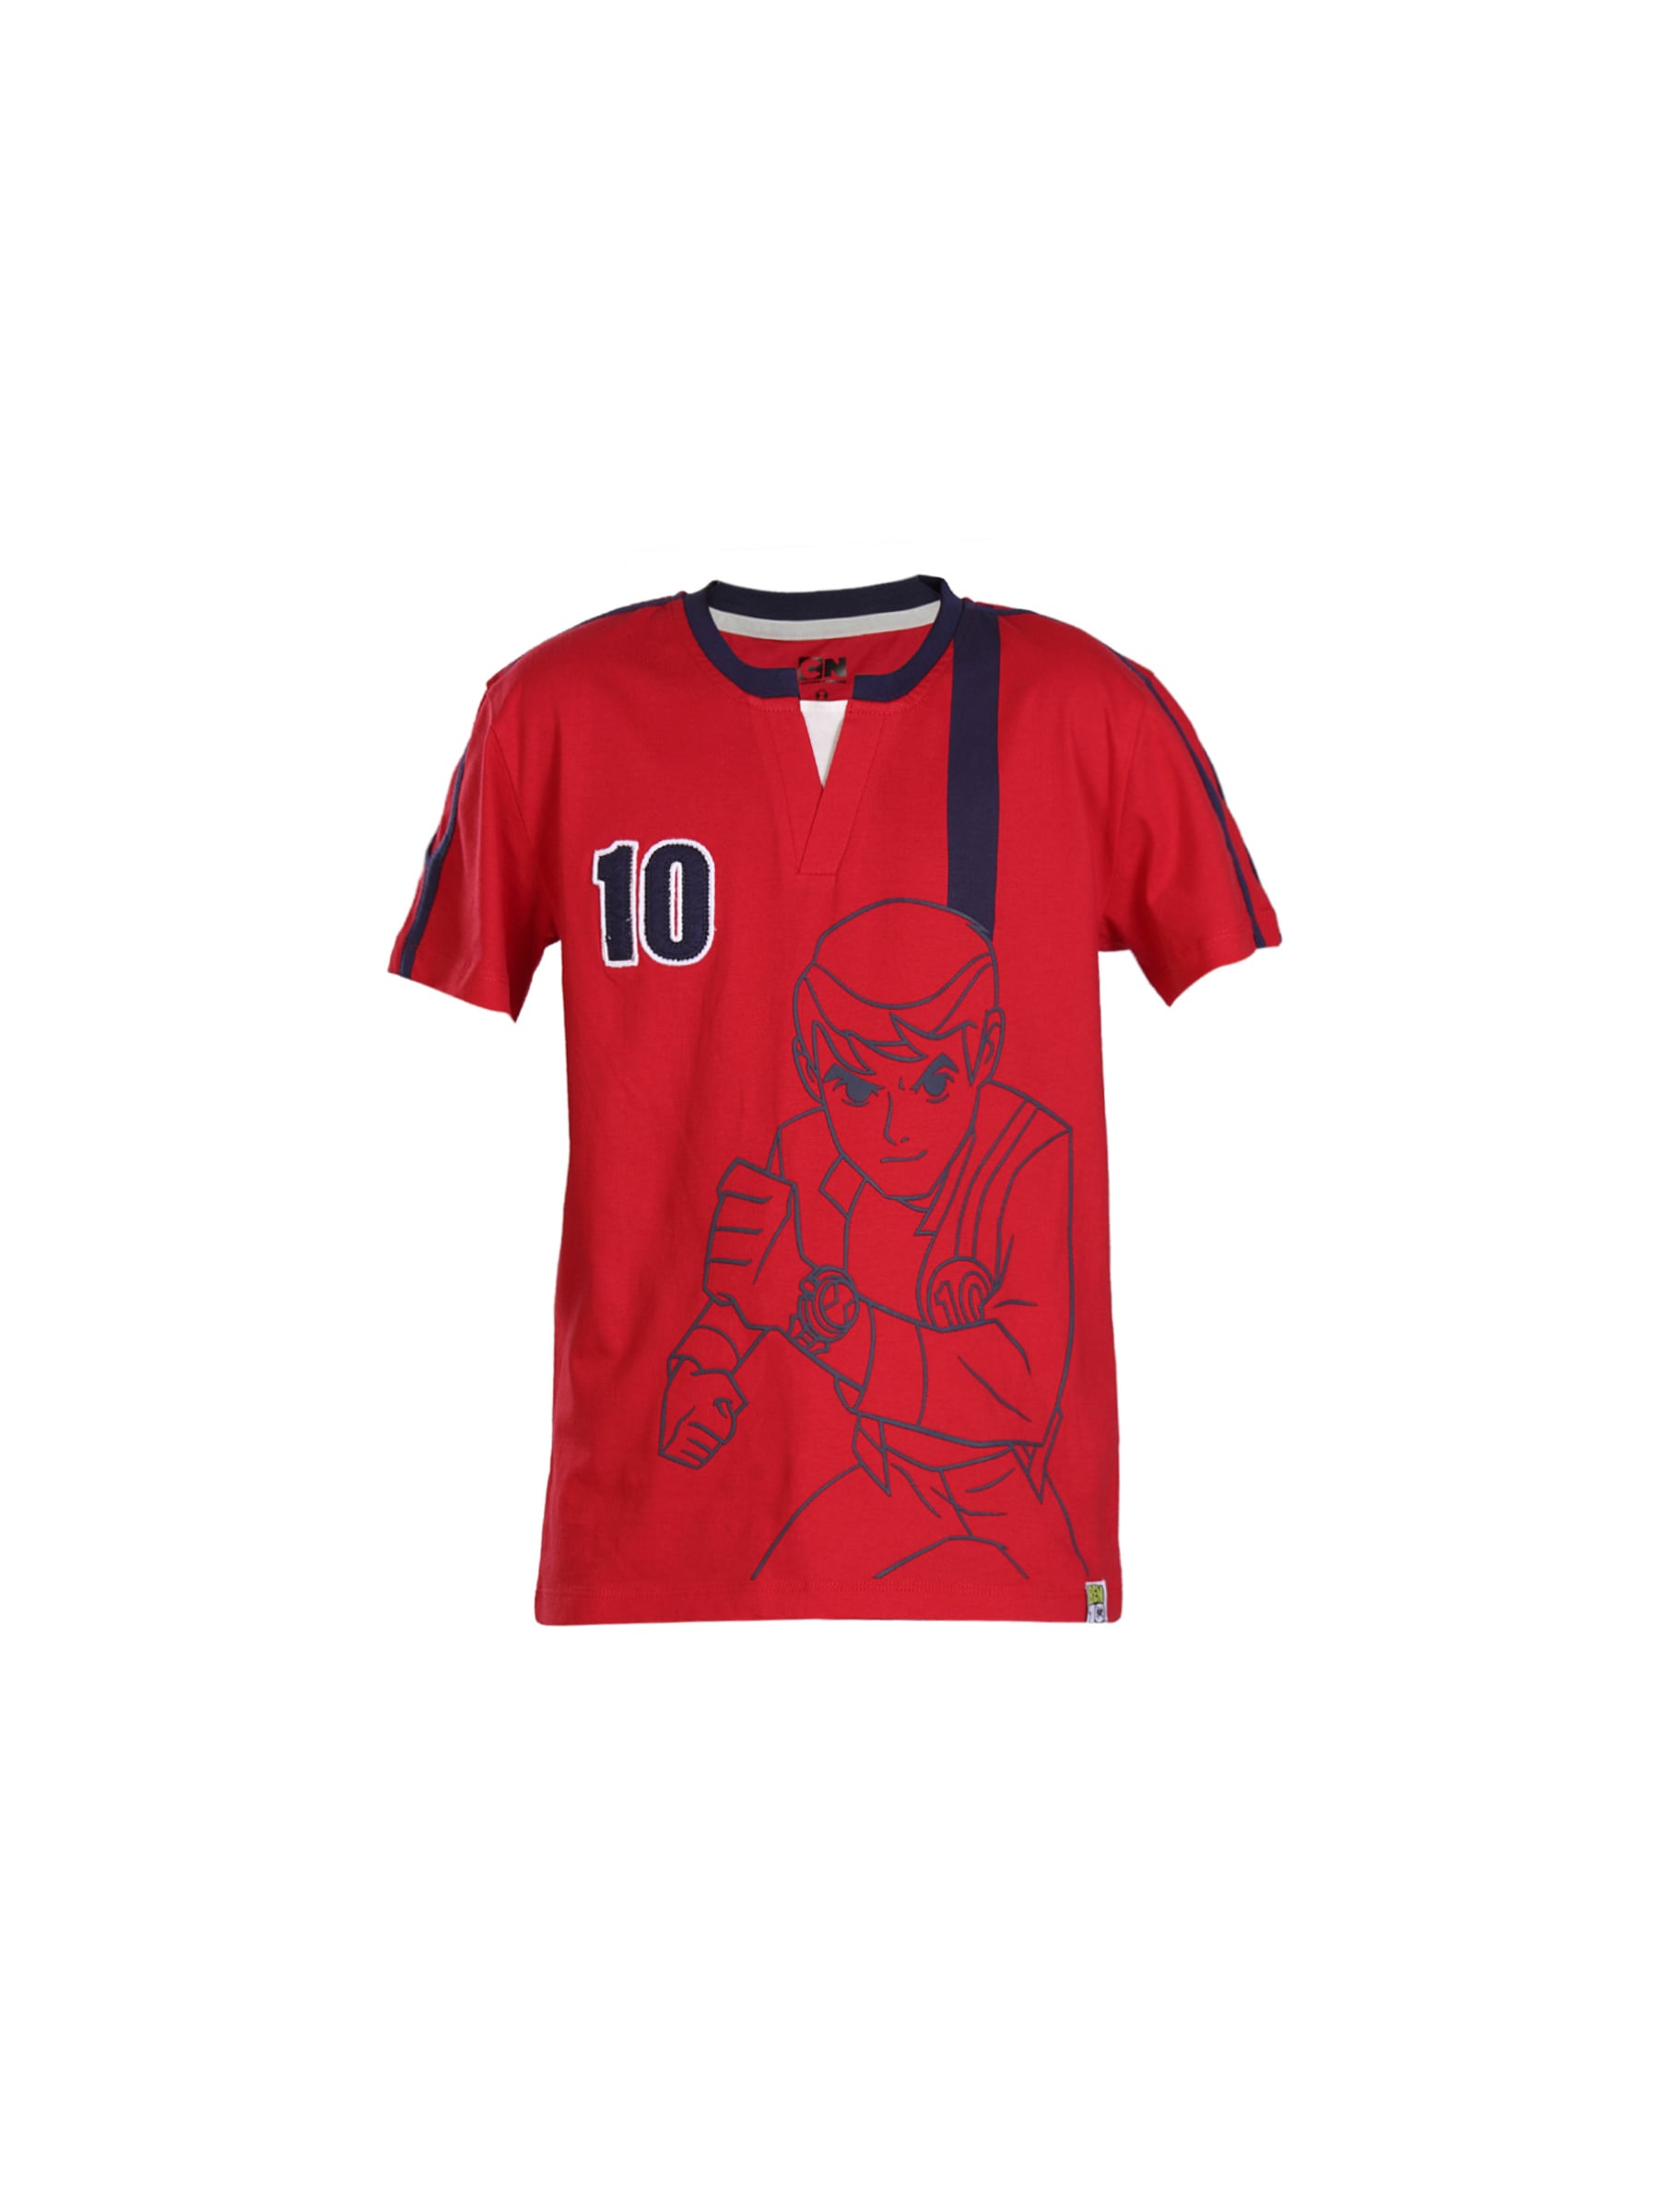 Ben 10 Boys Red Printed T-shirt